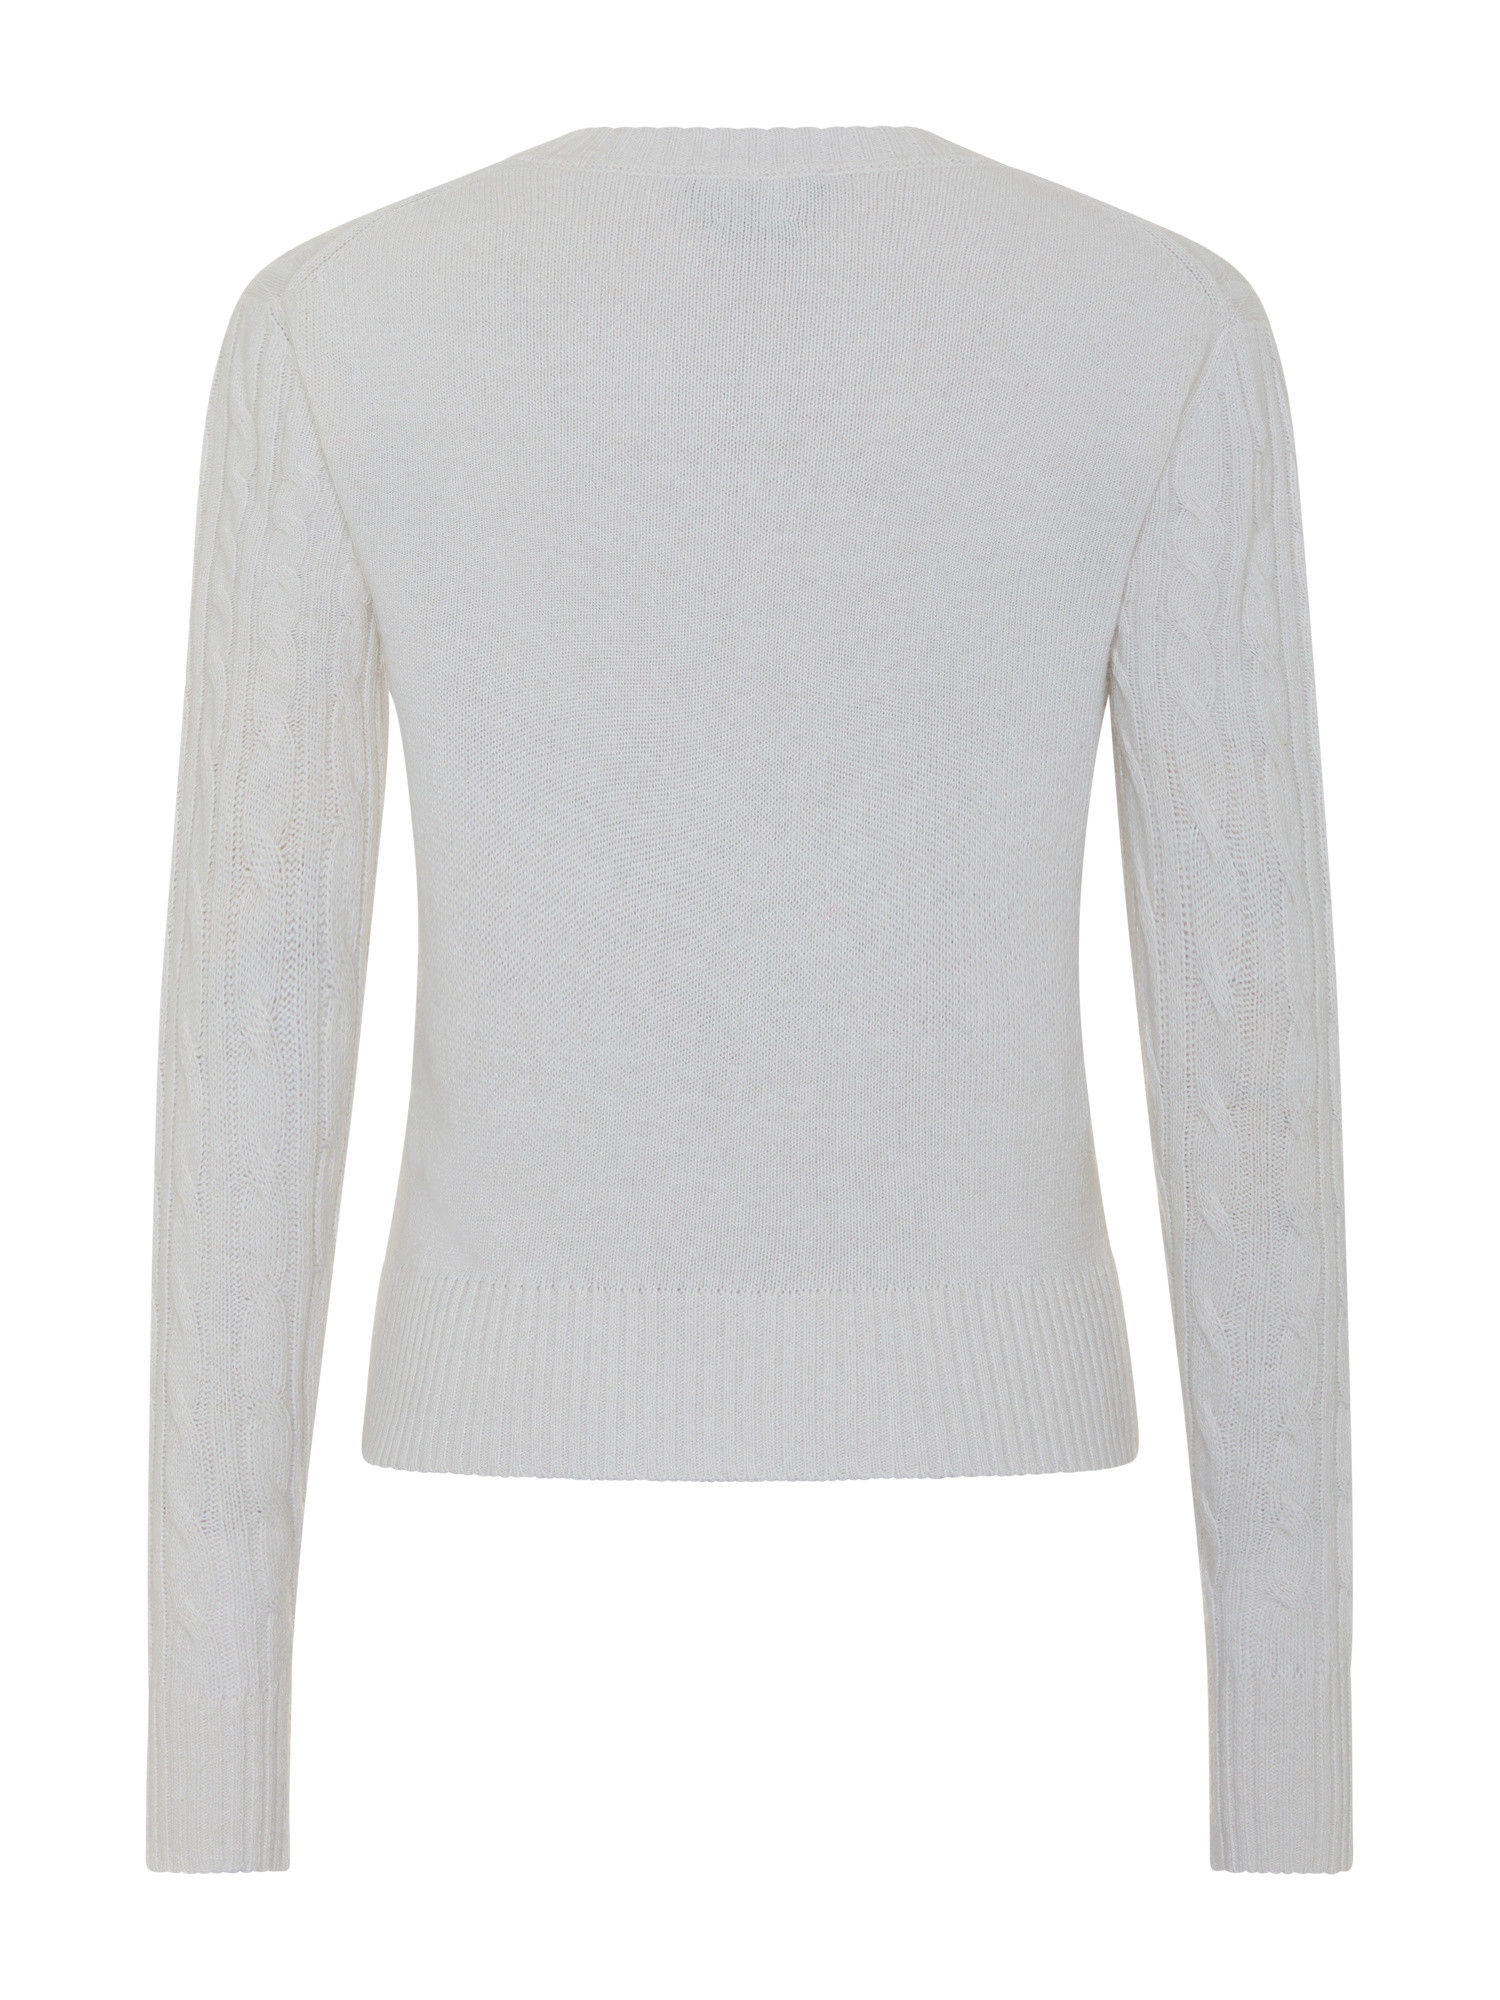 Koan - Crew-neck sweater with braid motif, White Cream, large image number 1